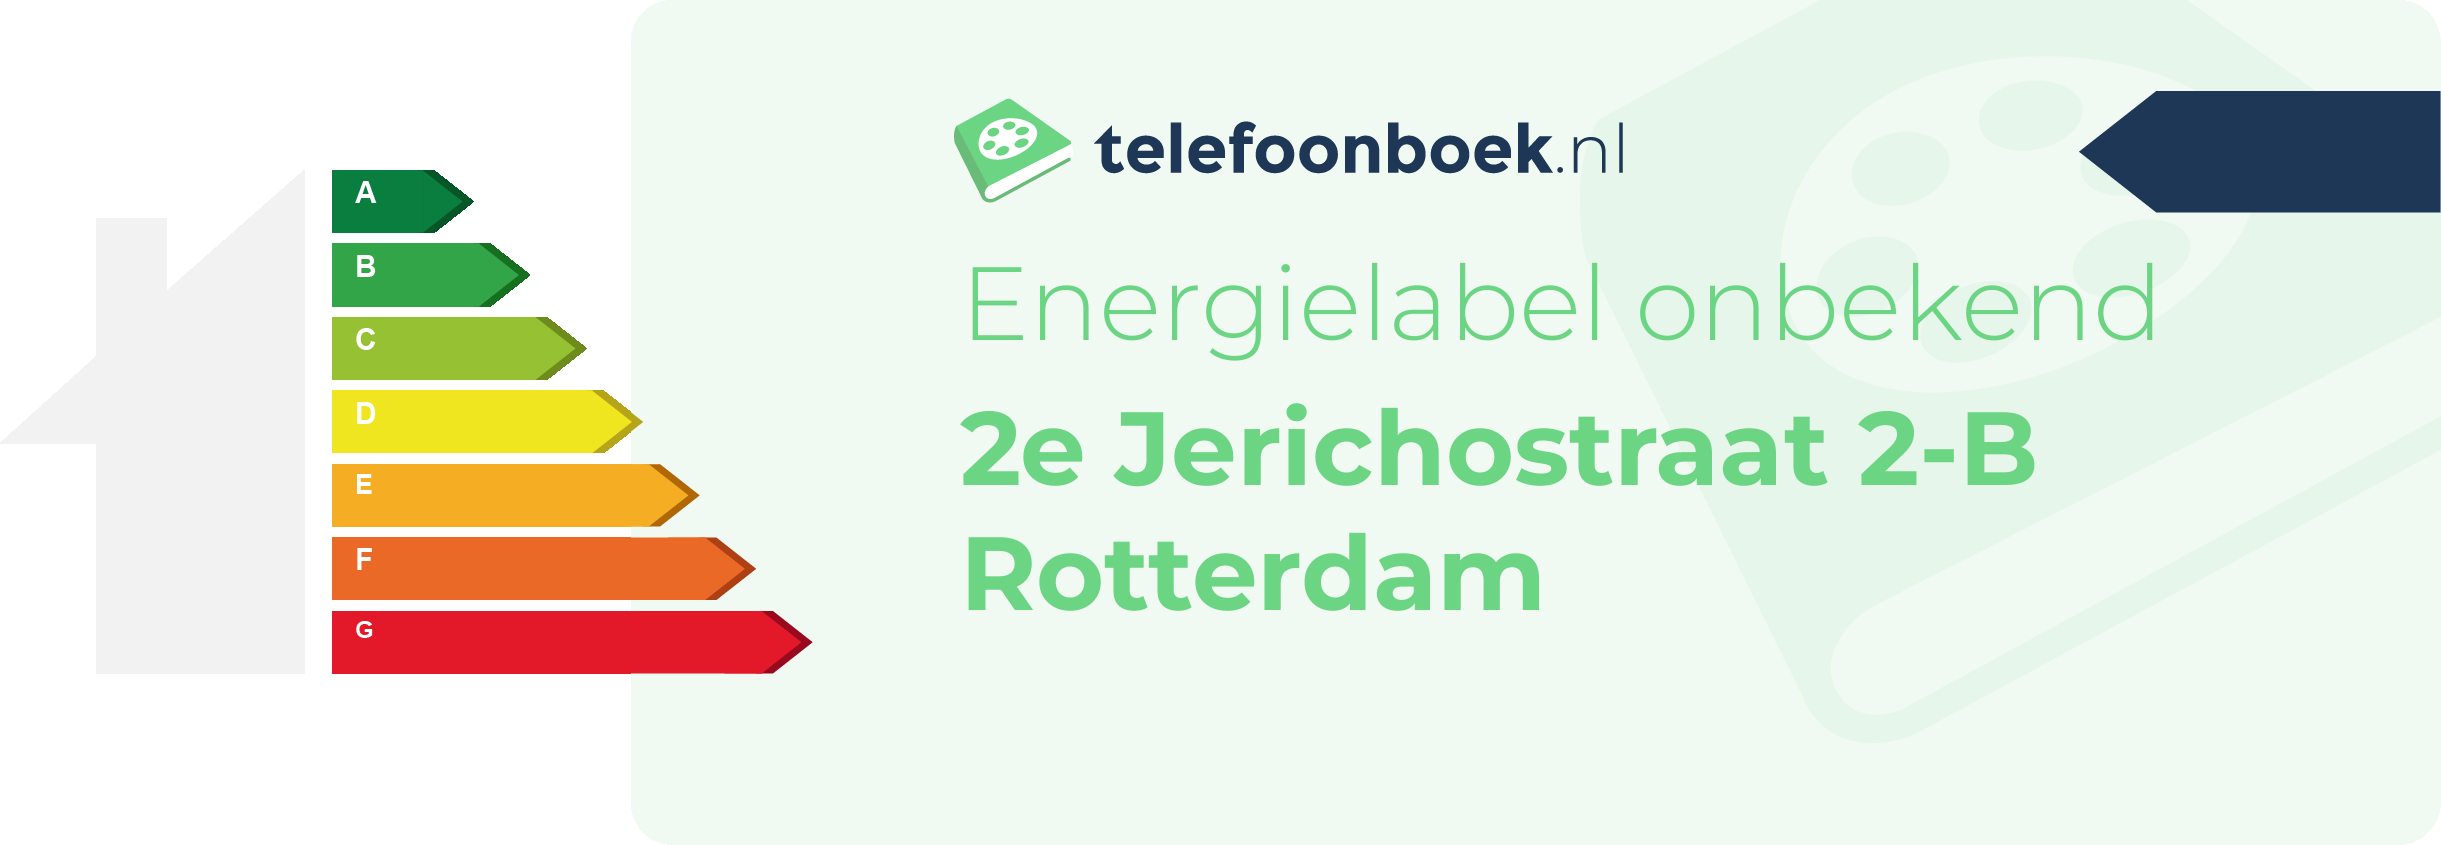 Energielabel 2e Jerichostraat 2-B Rotterdam